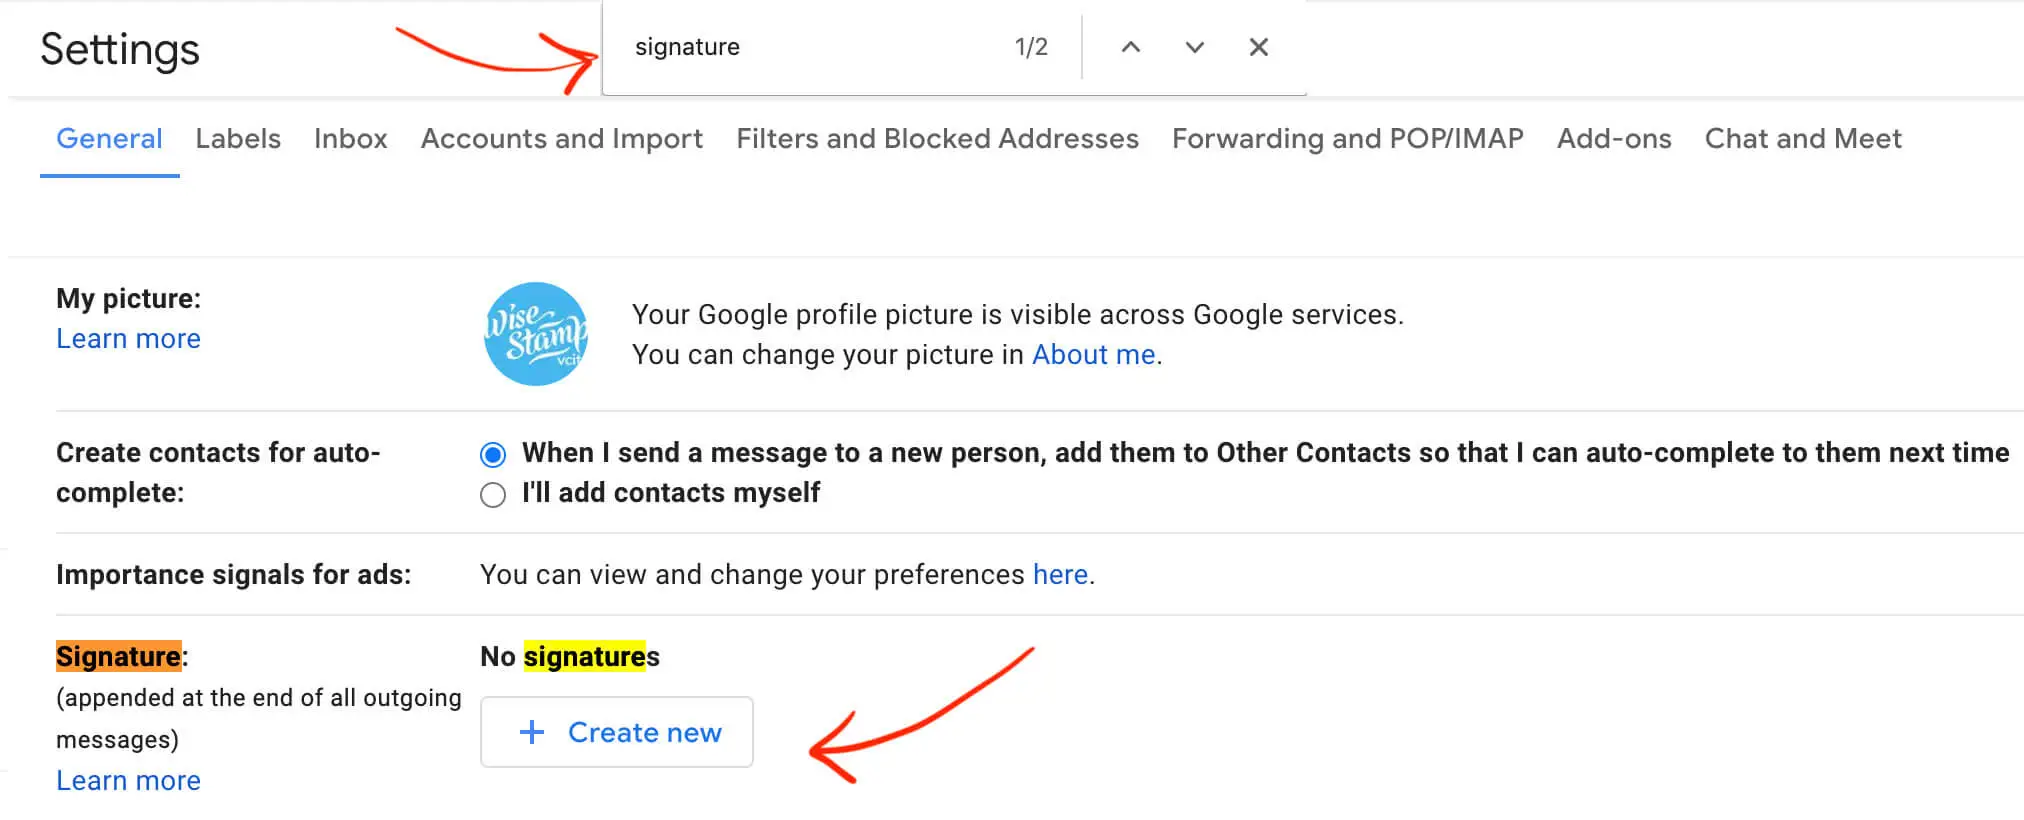 Add email signature in Gmail - Step 2 - Add new Gmail signature